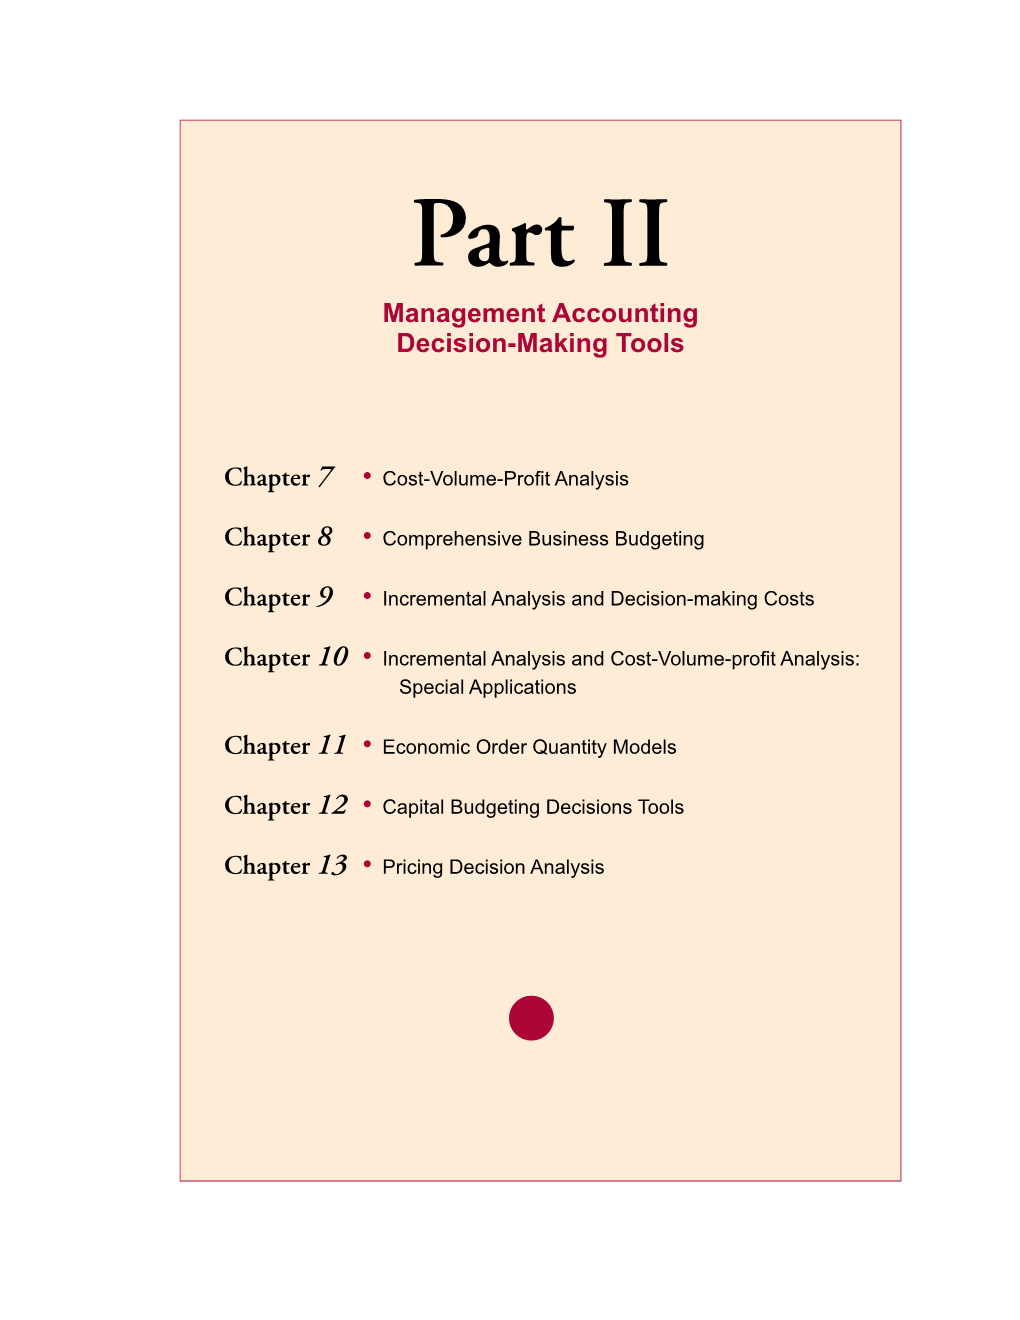 Chapter 7 Cost-Volume-Profit Analysis